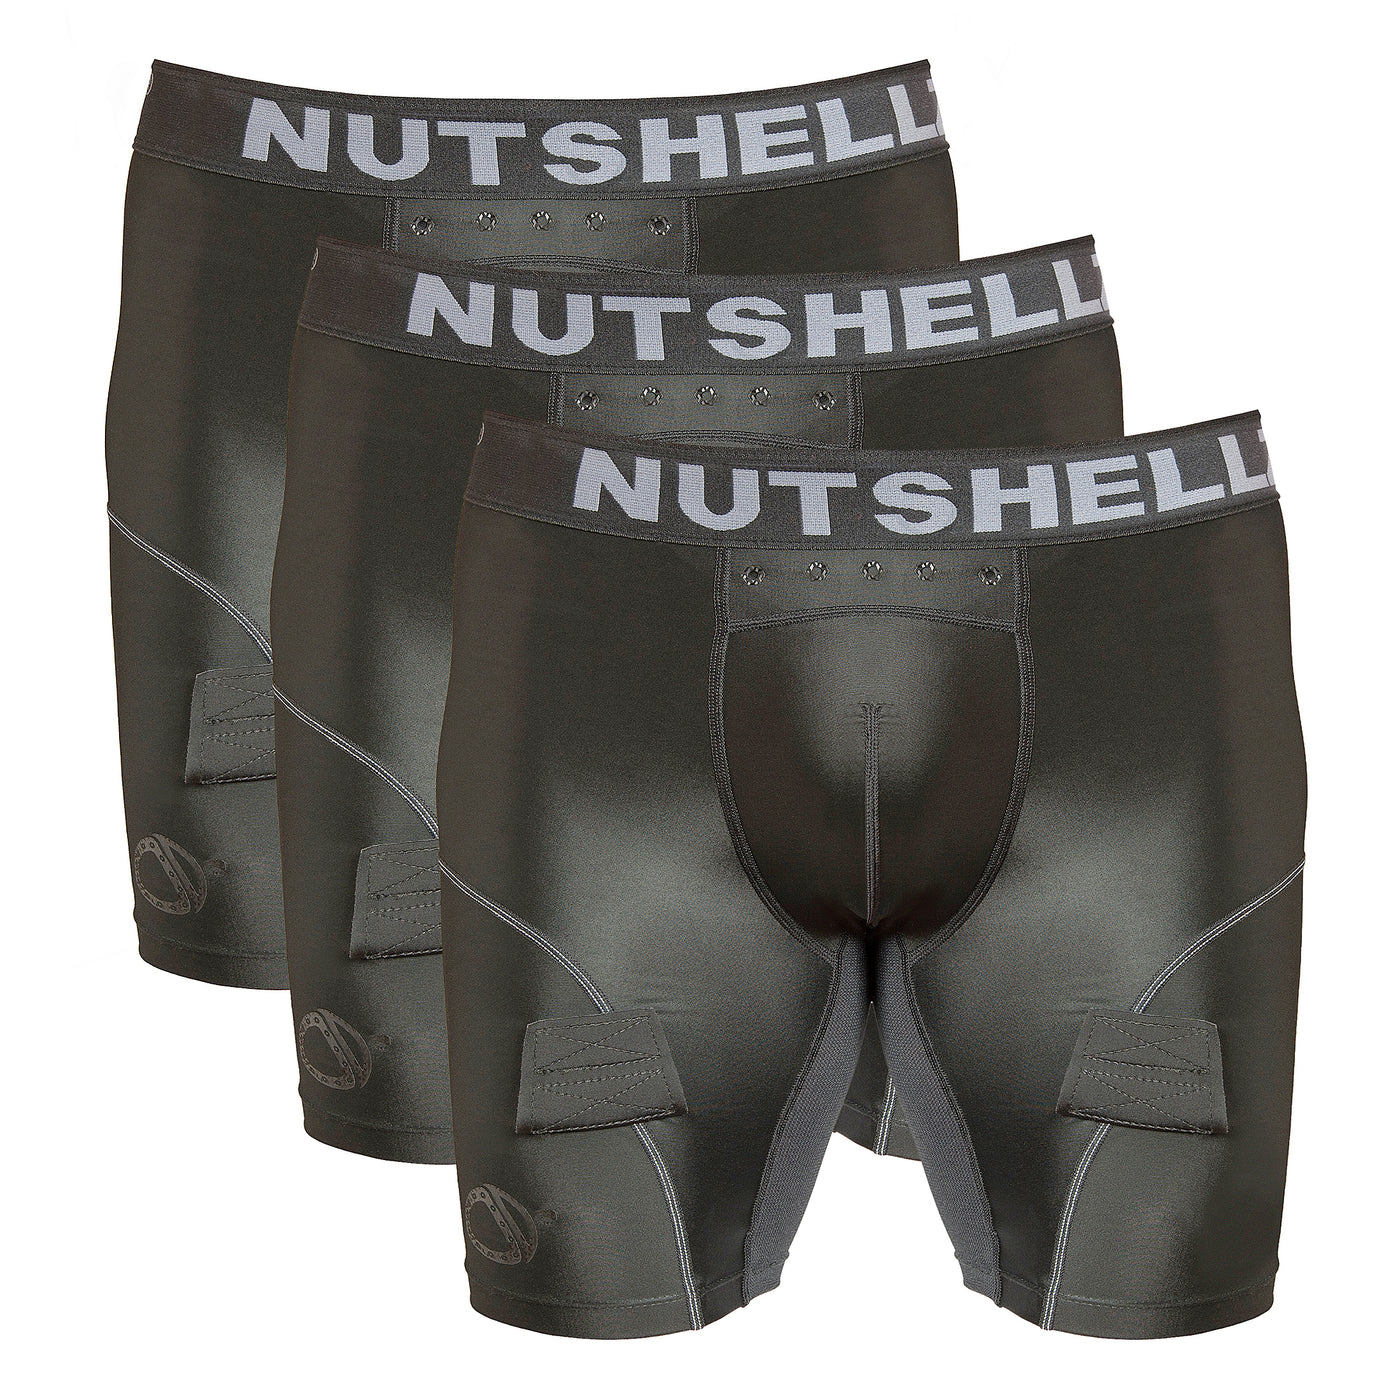 Nutshellz® Hockey Jock-short With Velcro 3 Pack/Black/Adult